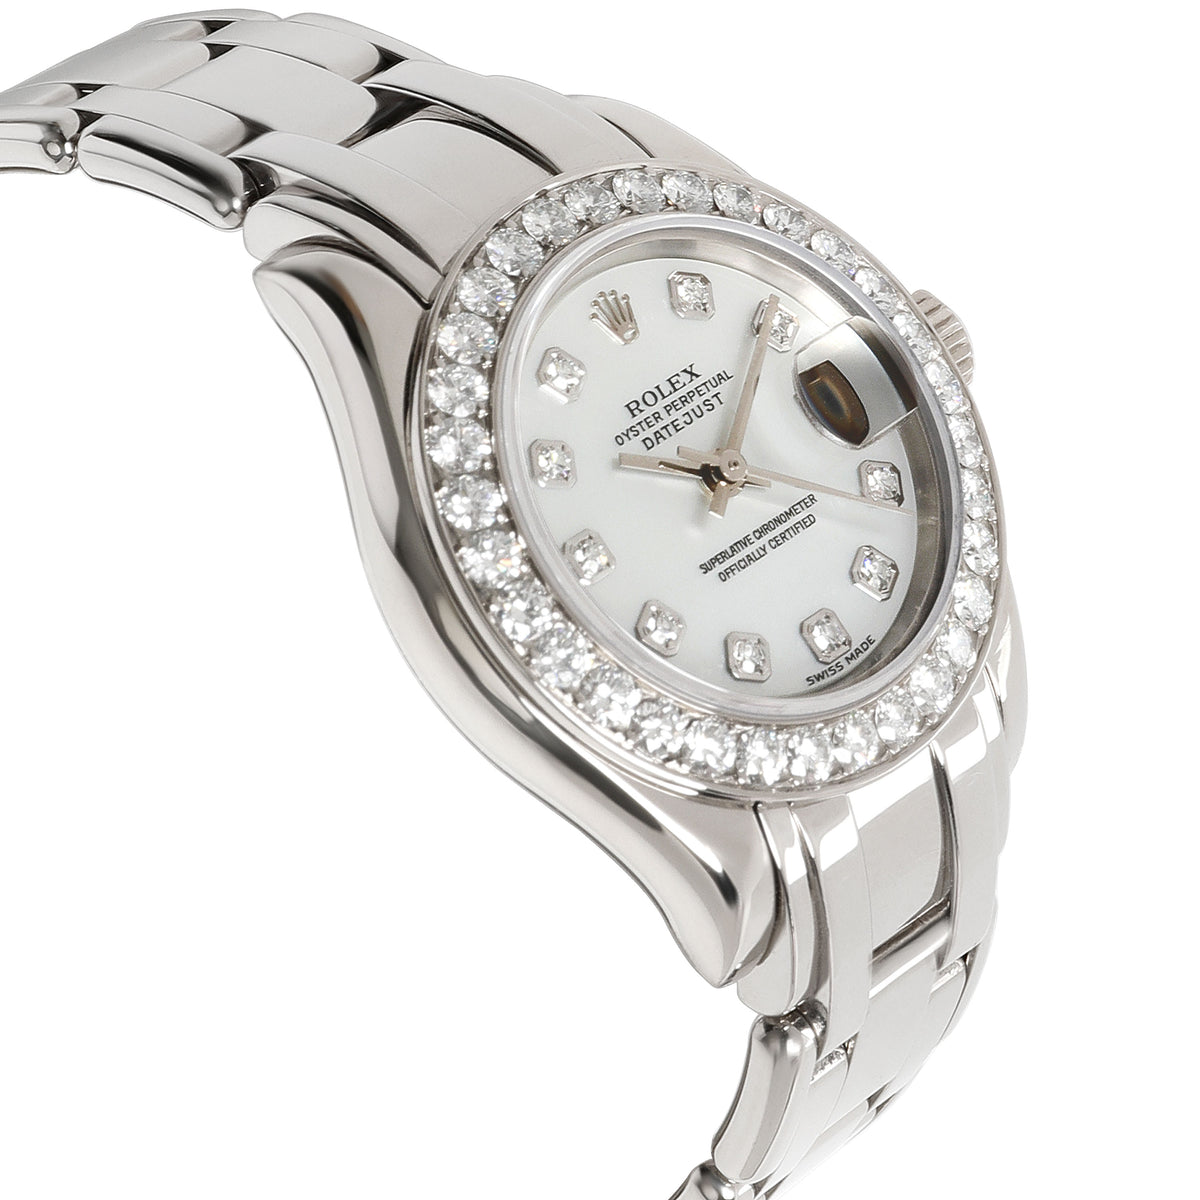 Rolex Pearlmaster 80299 Women's Watch in 18kt White Gold